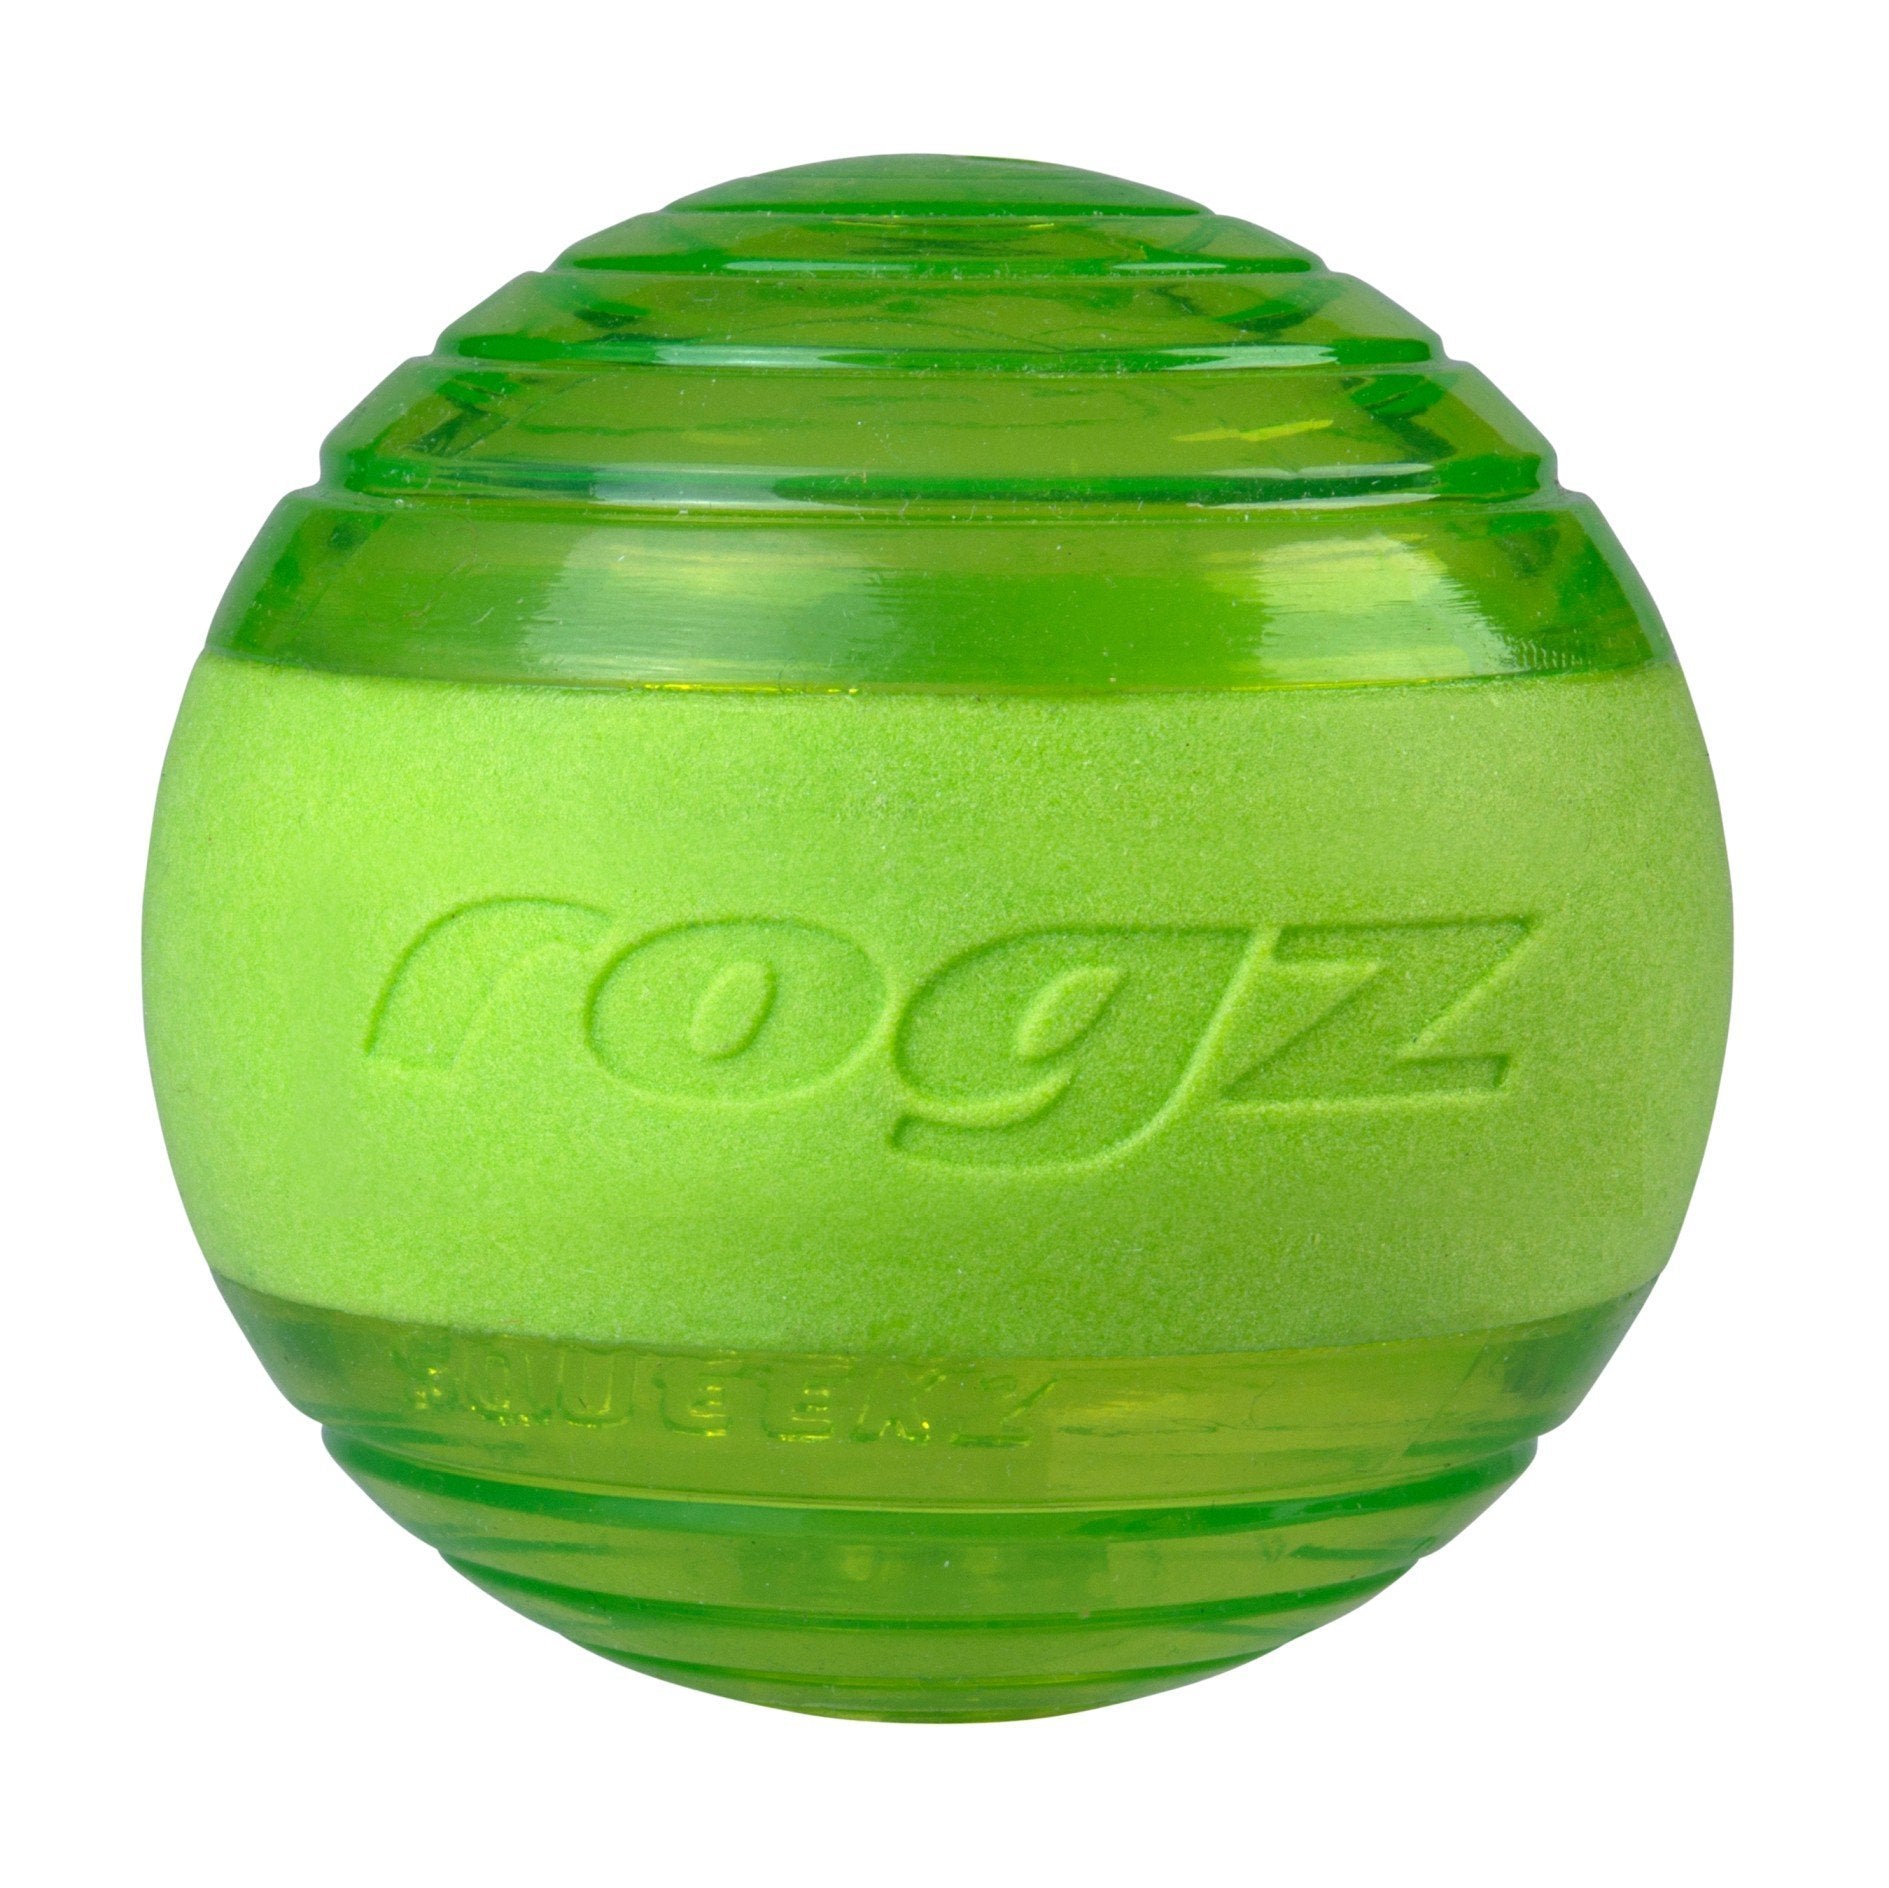 Rogz Dog Squeakz Ball - Squeaker Toys